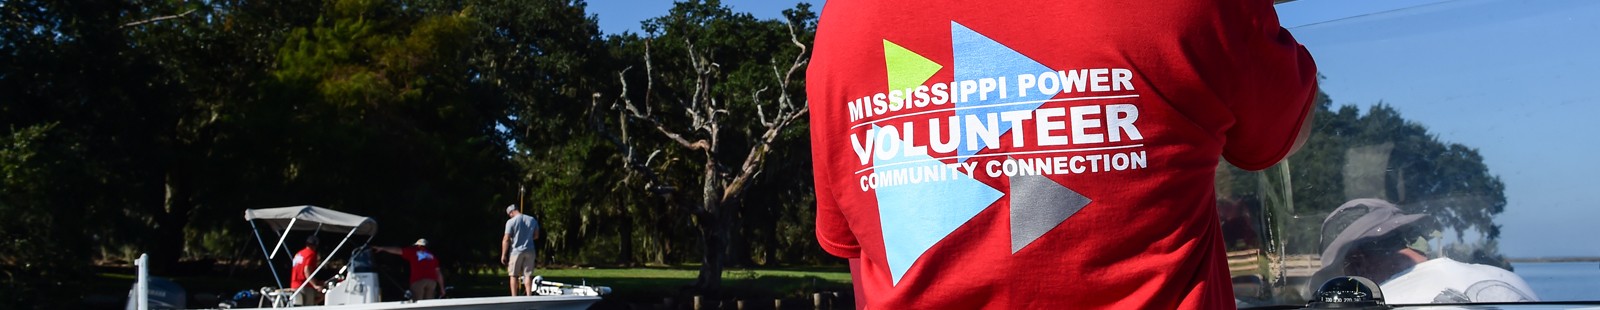 Mississippi Power volunteer